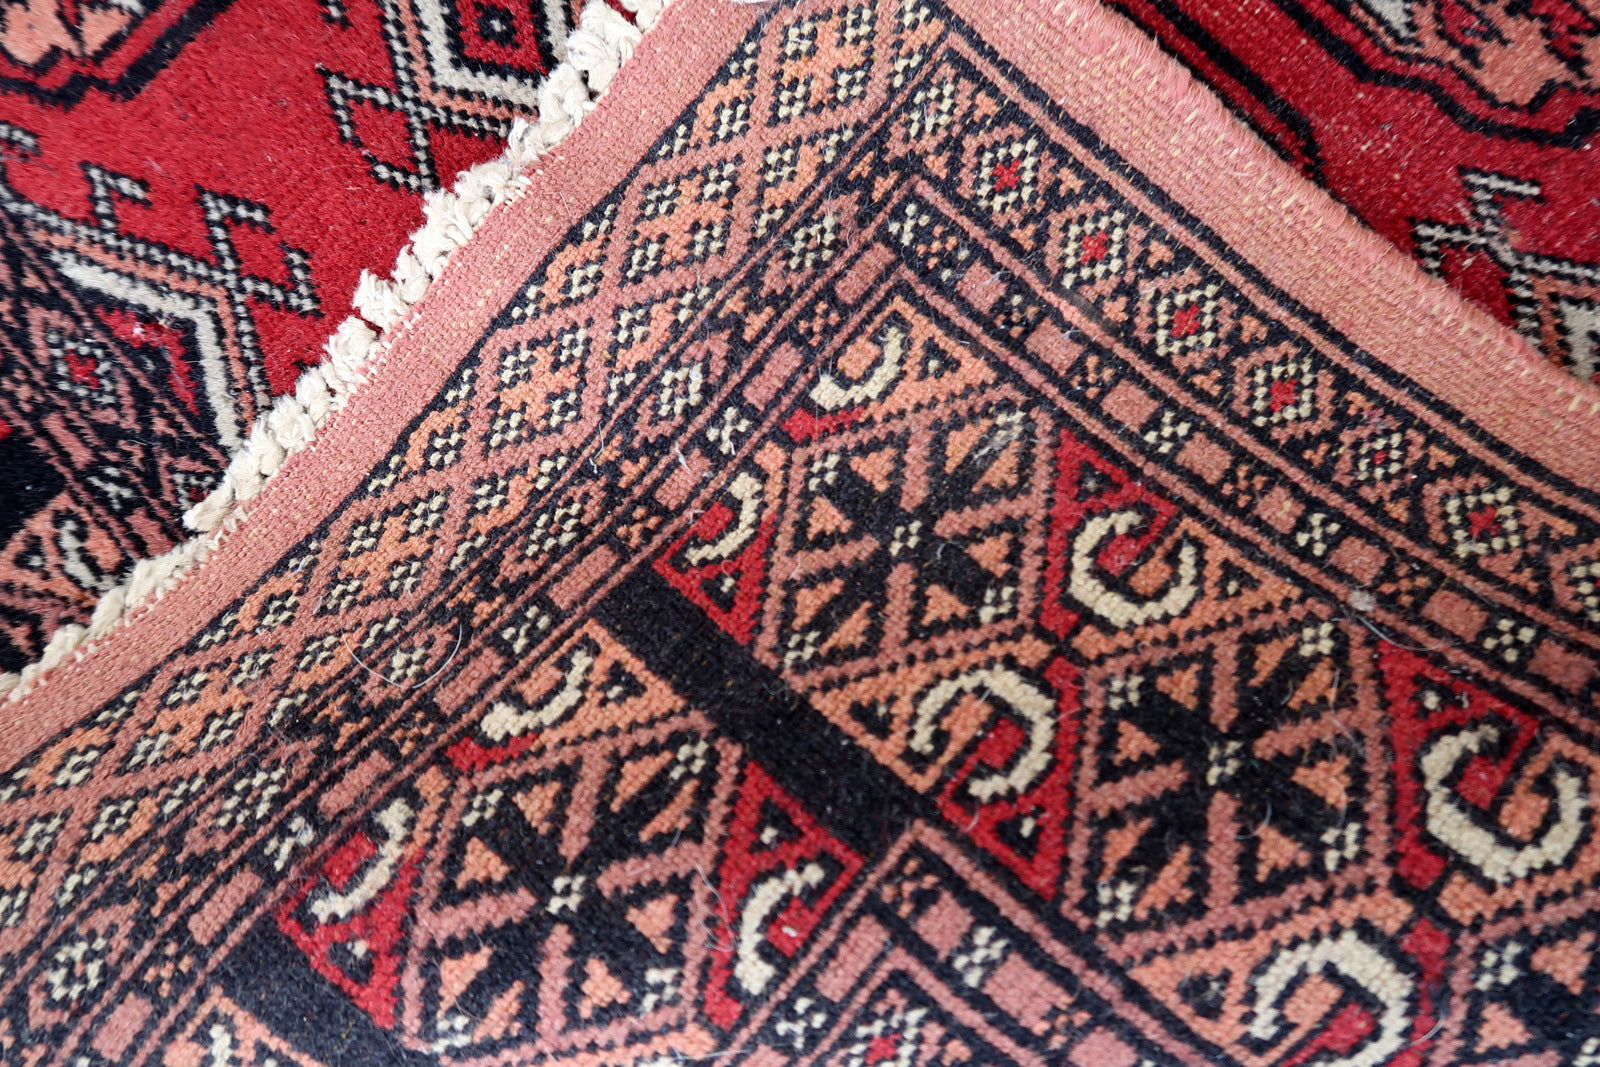 Back side of the Handmade Vintage Uzbek Bukhara Runner, showcasing craftsmanship.